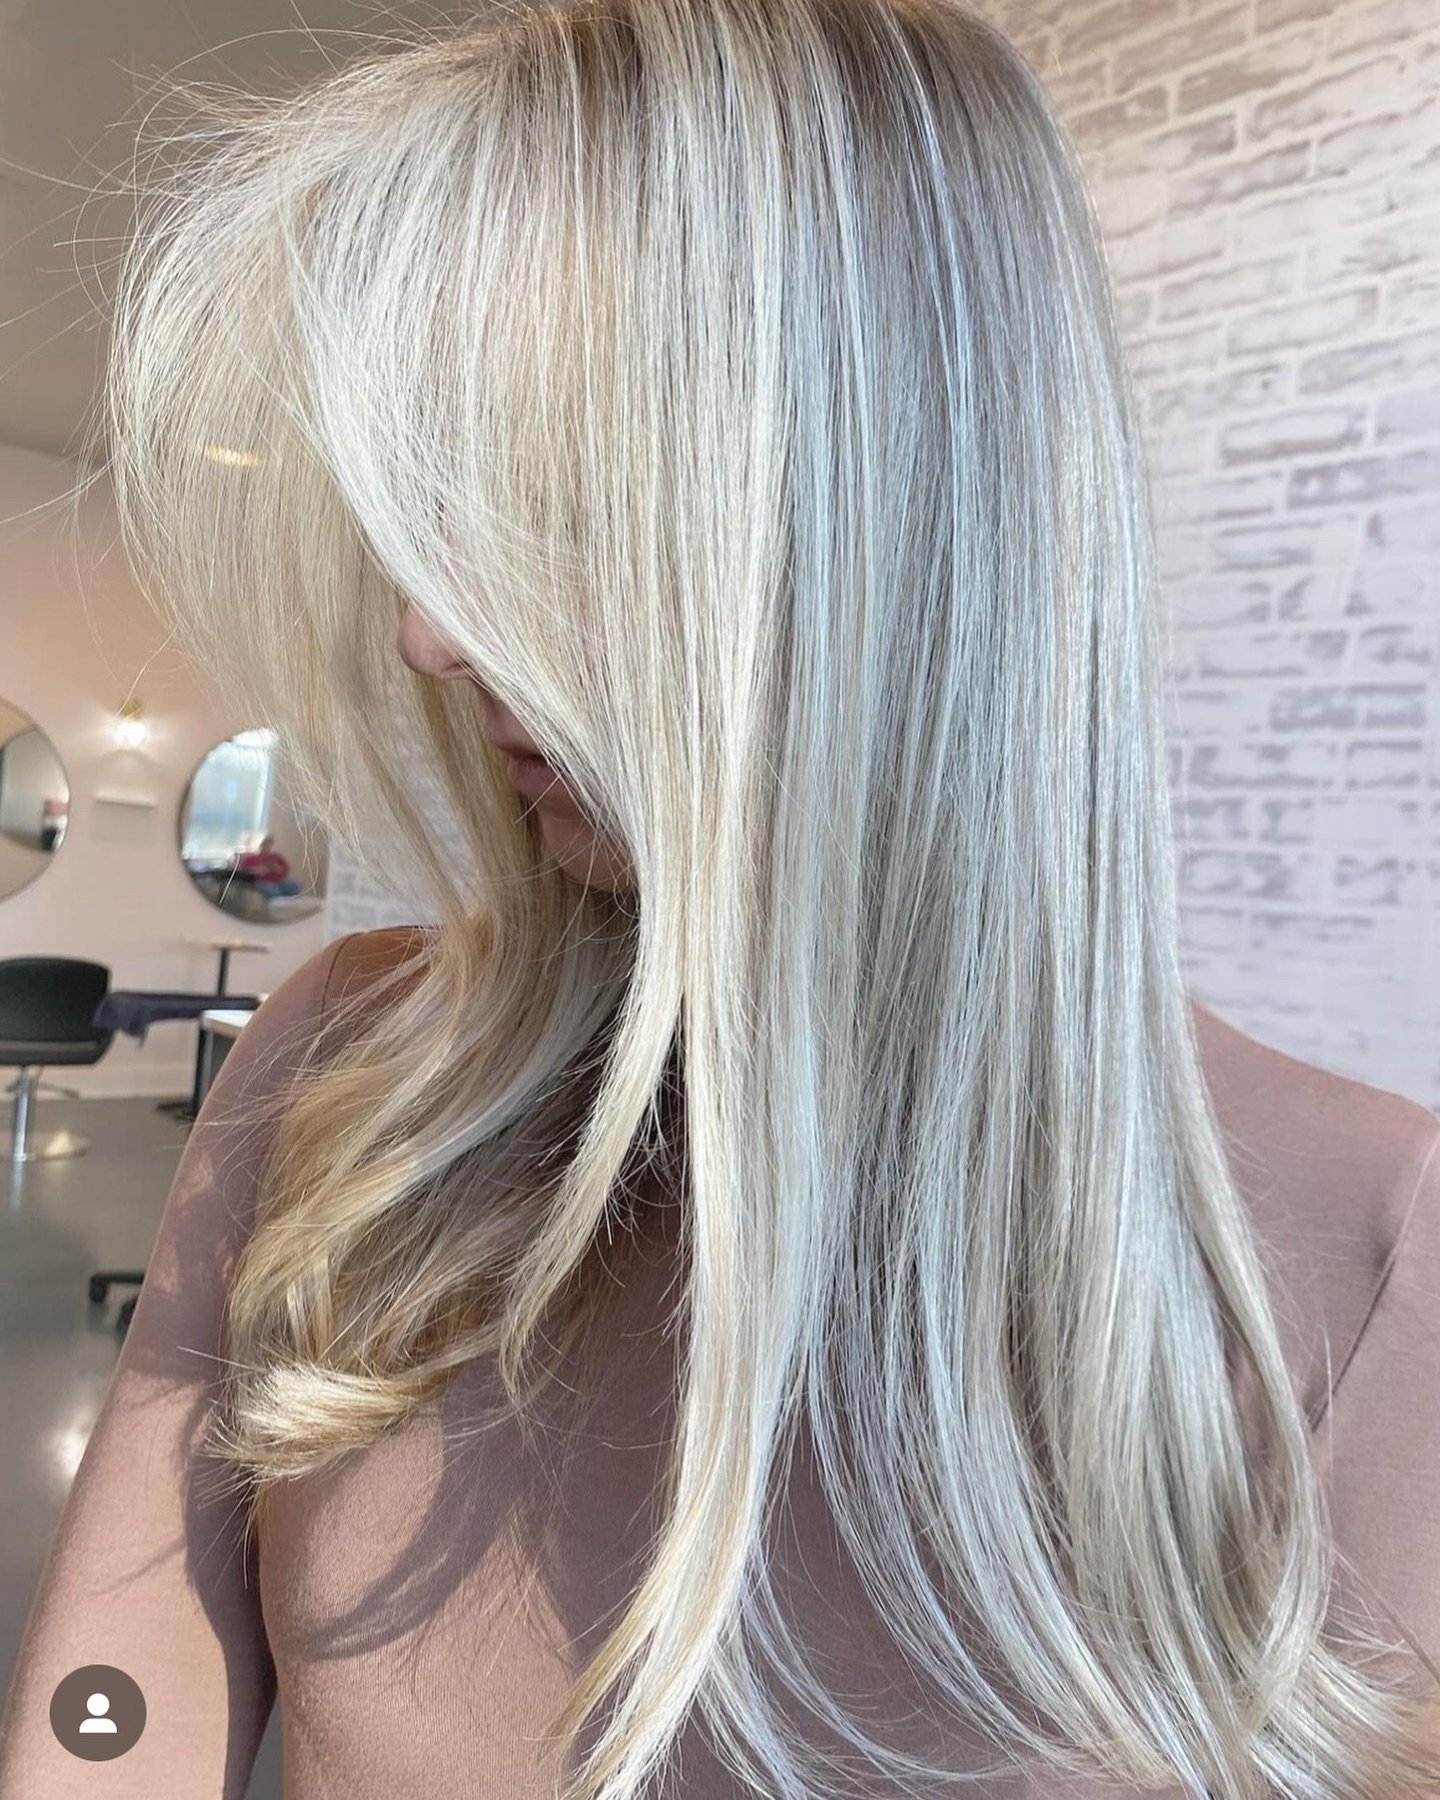 Impactful blonde✨💫

Colored by @hairbymariahmonte 

Toner @redkenpro 

&bull;
&bull;
&bull;
#518hair #albanyny #lathamny #salon #518salon #highlights #balayage #haircut #blondehair #blondehighlights #redken #haircolor #highlights